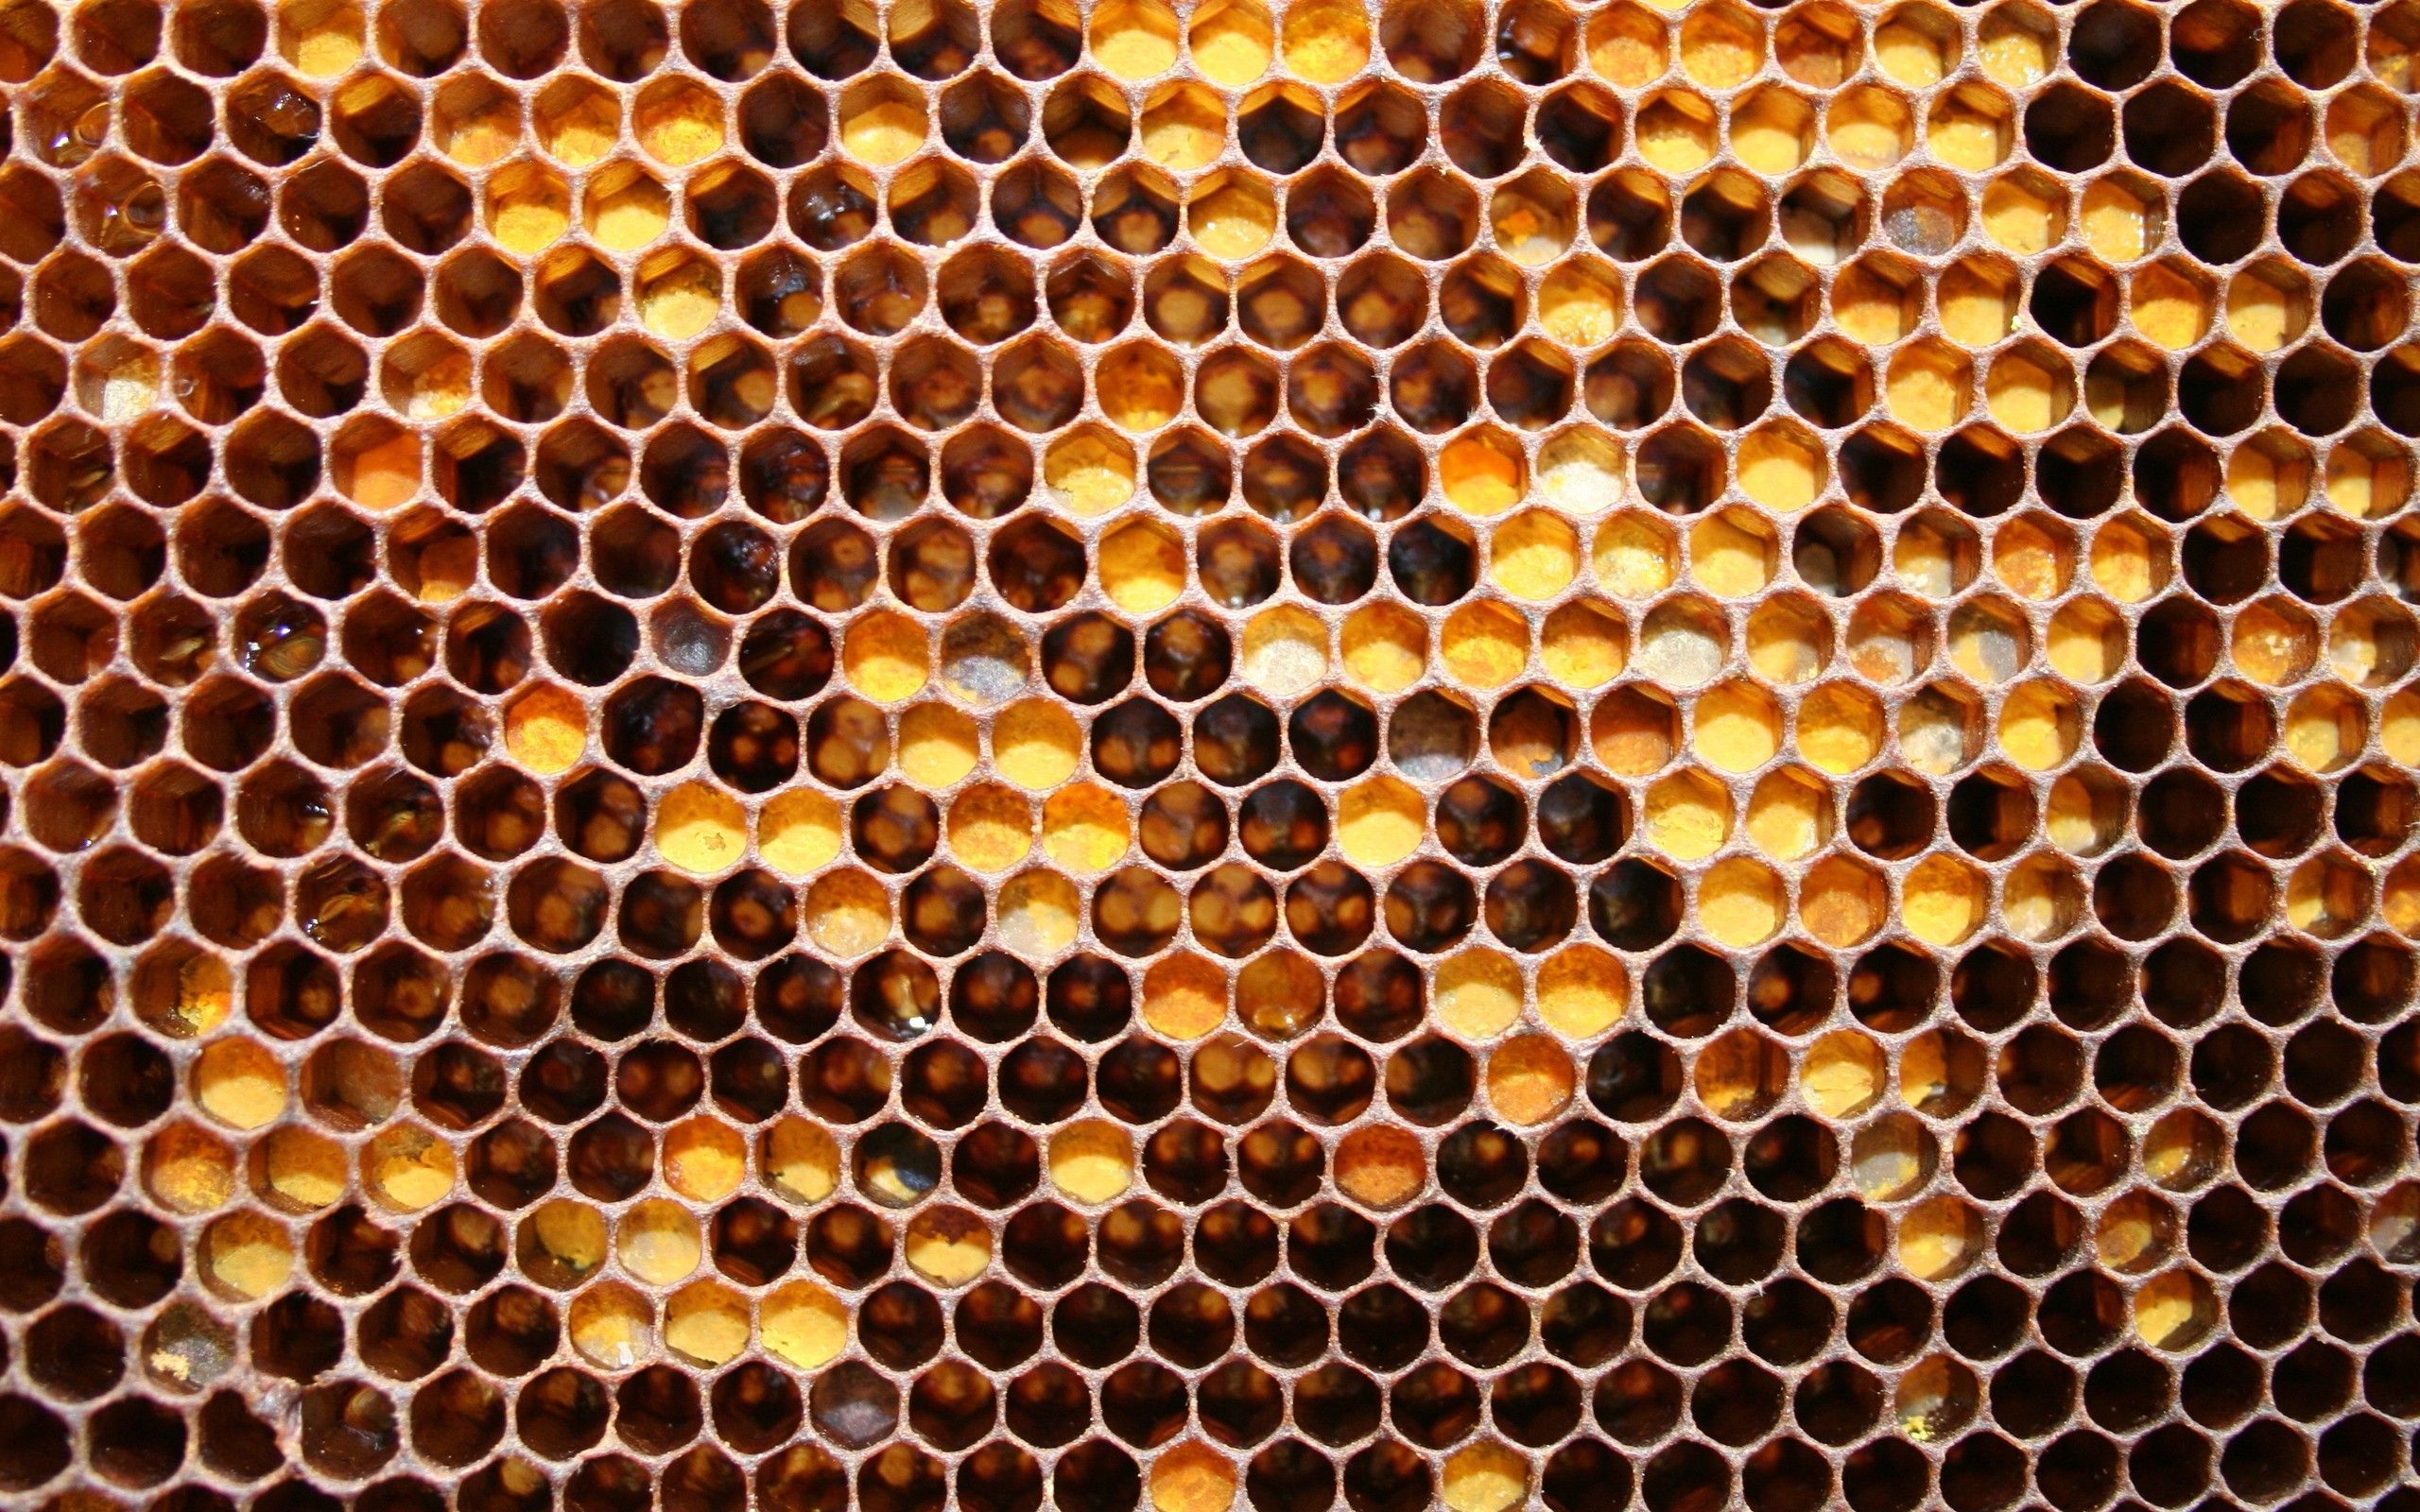 Beehive Wallpaper Free Beehive Background